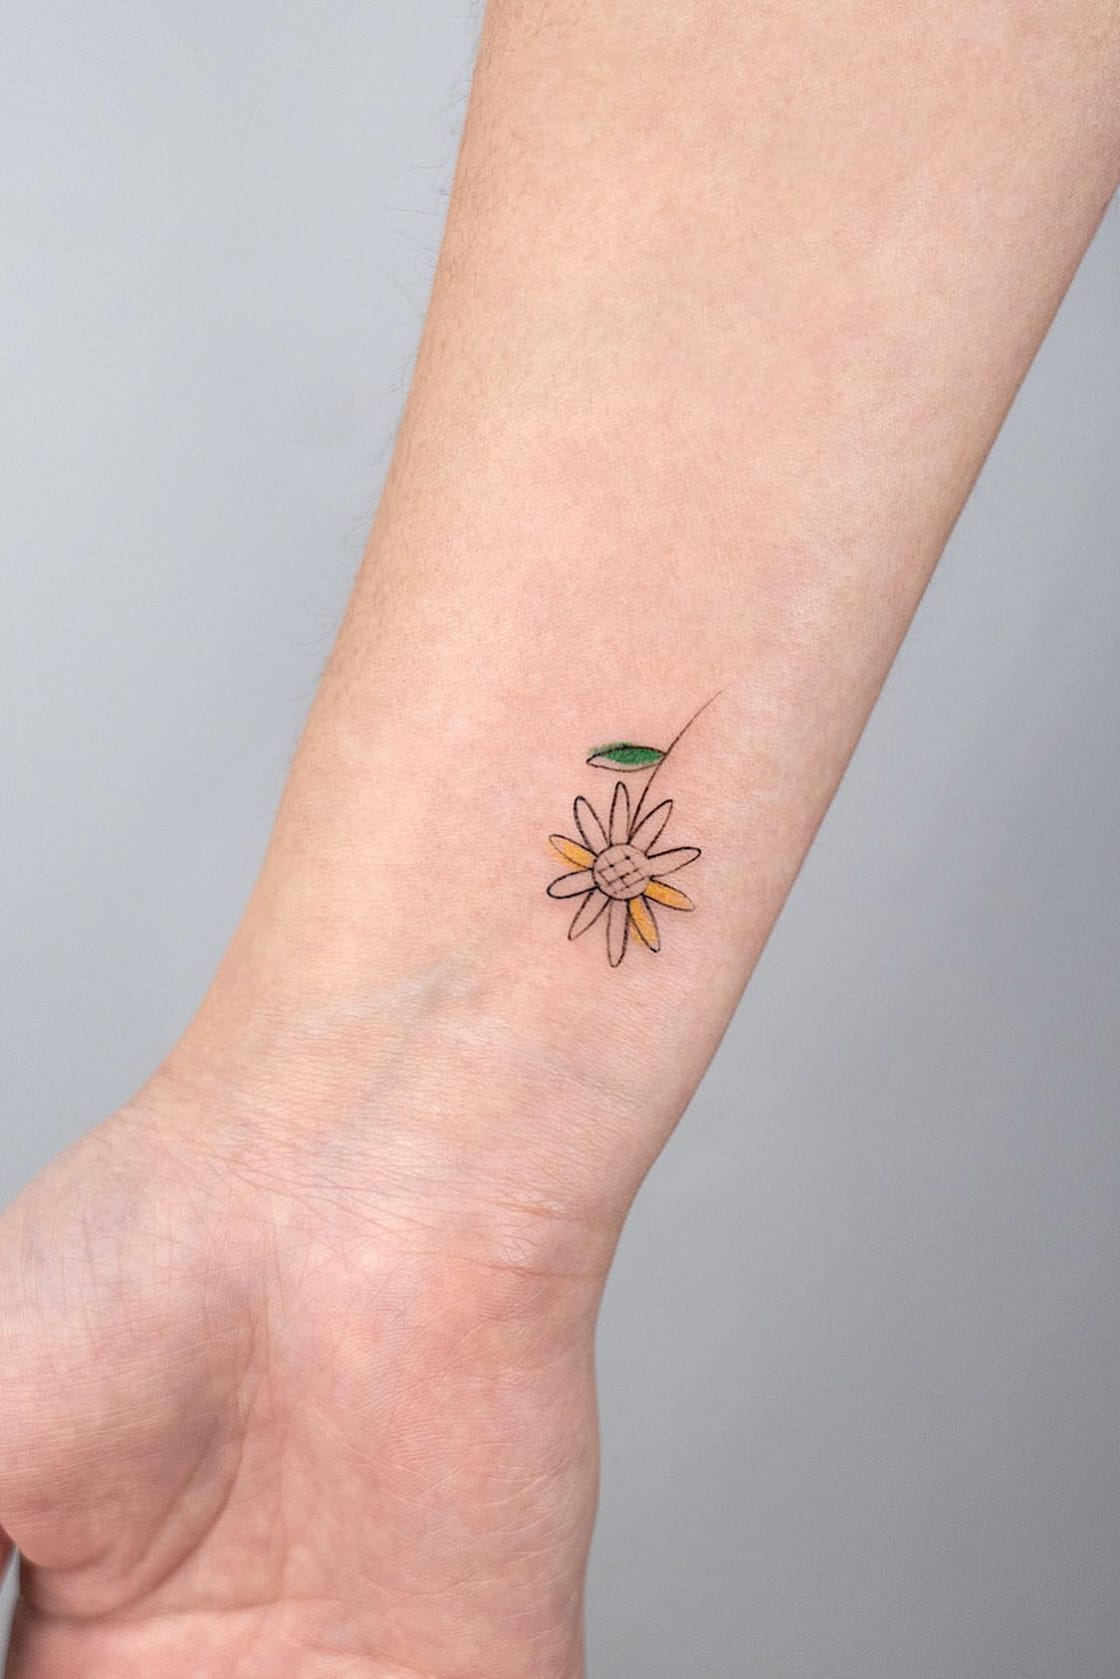 small sunflower tattoo on wrist